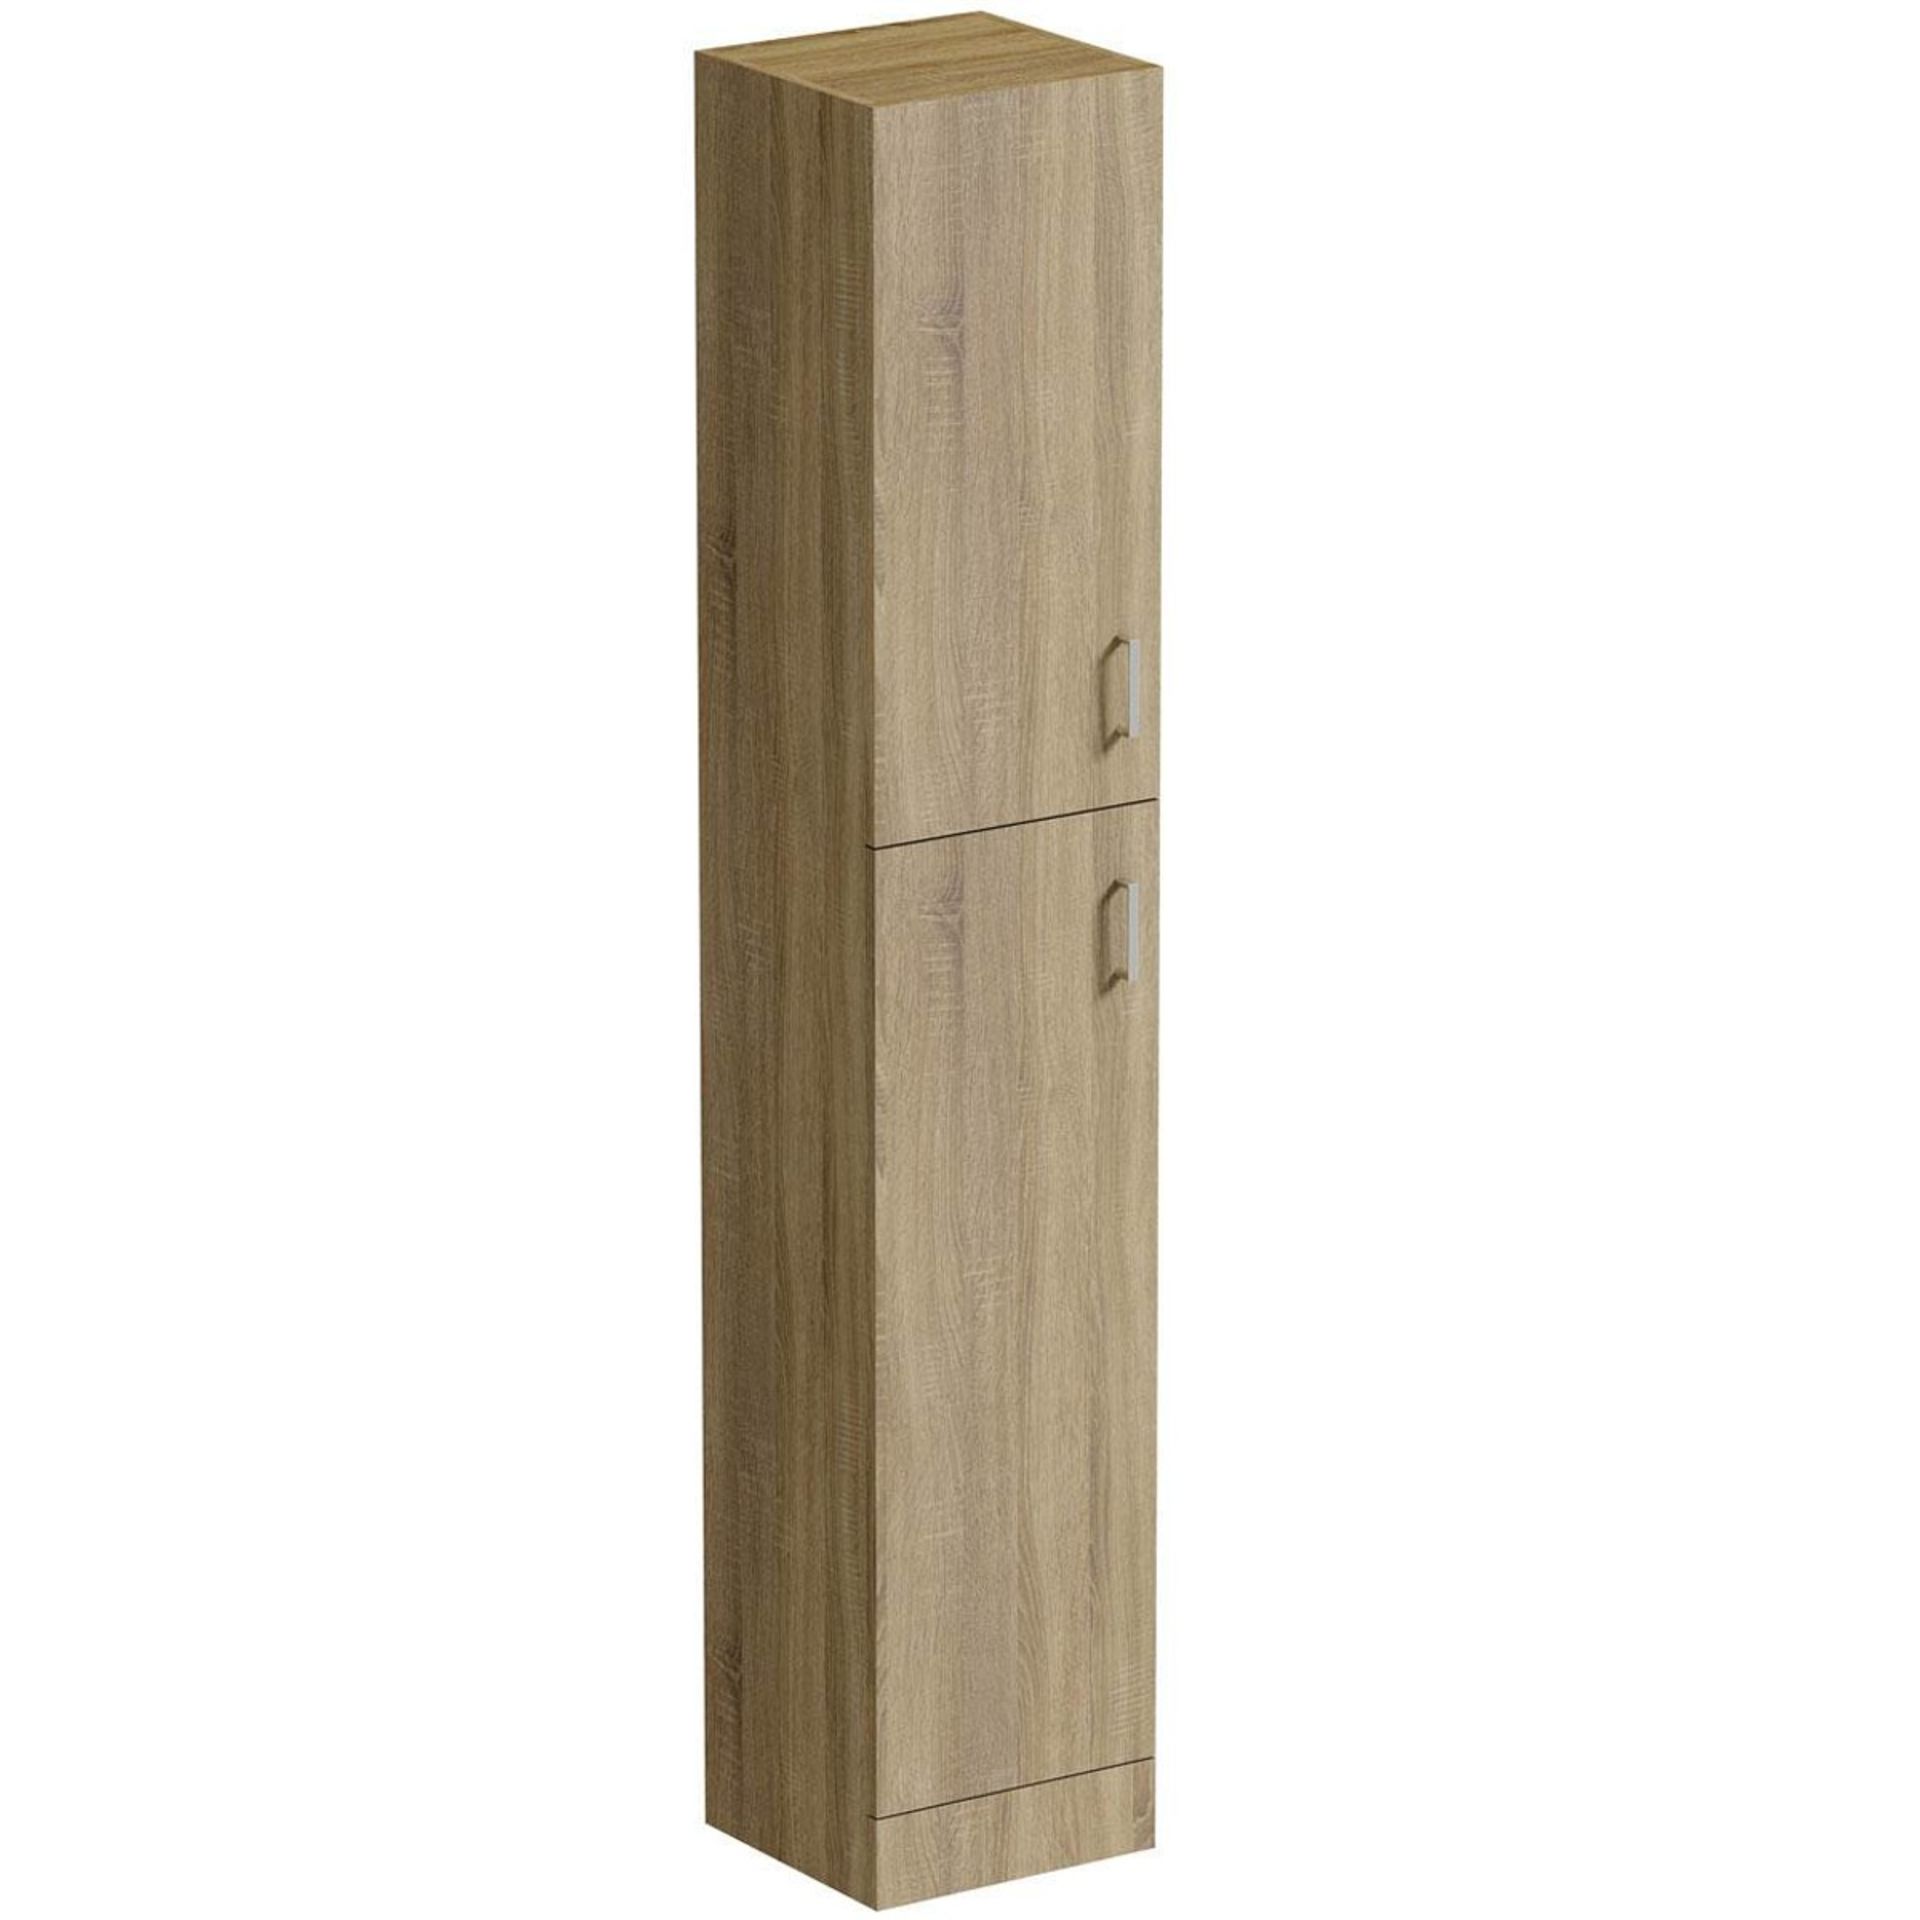 1 x Sienna Oak 300mm Tall Bathroom Storage Unit - Unused Stock - CL190 - Ref BR065- Location: Bolton - Image 5 of 5